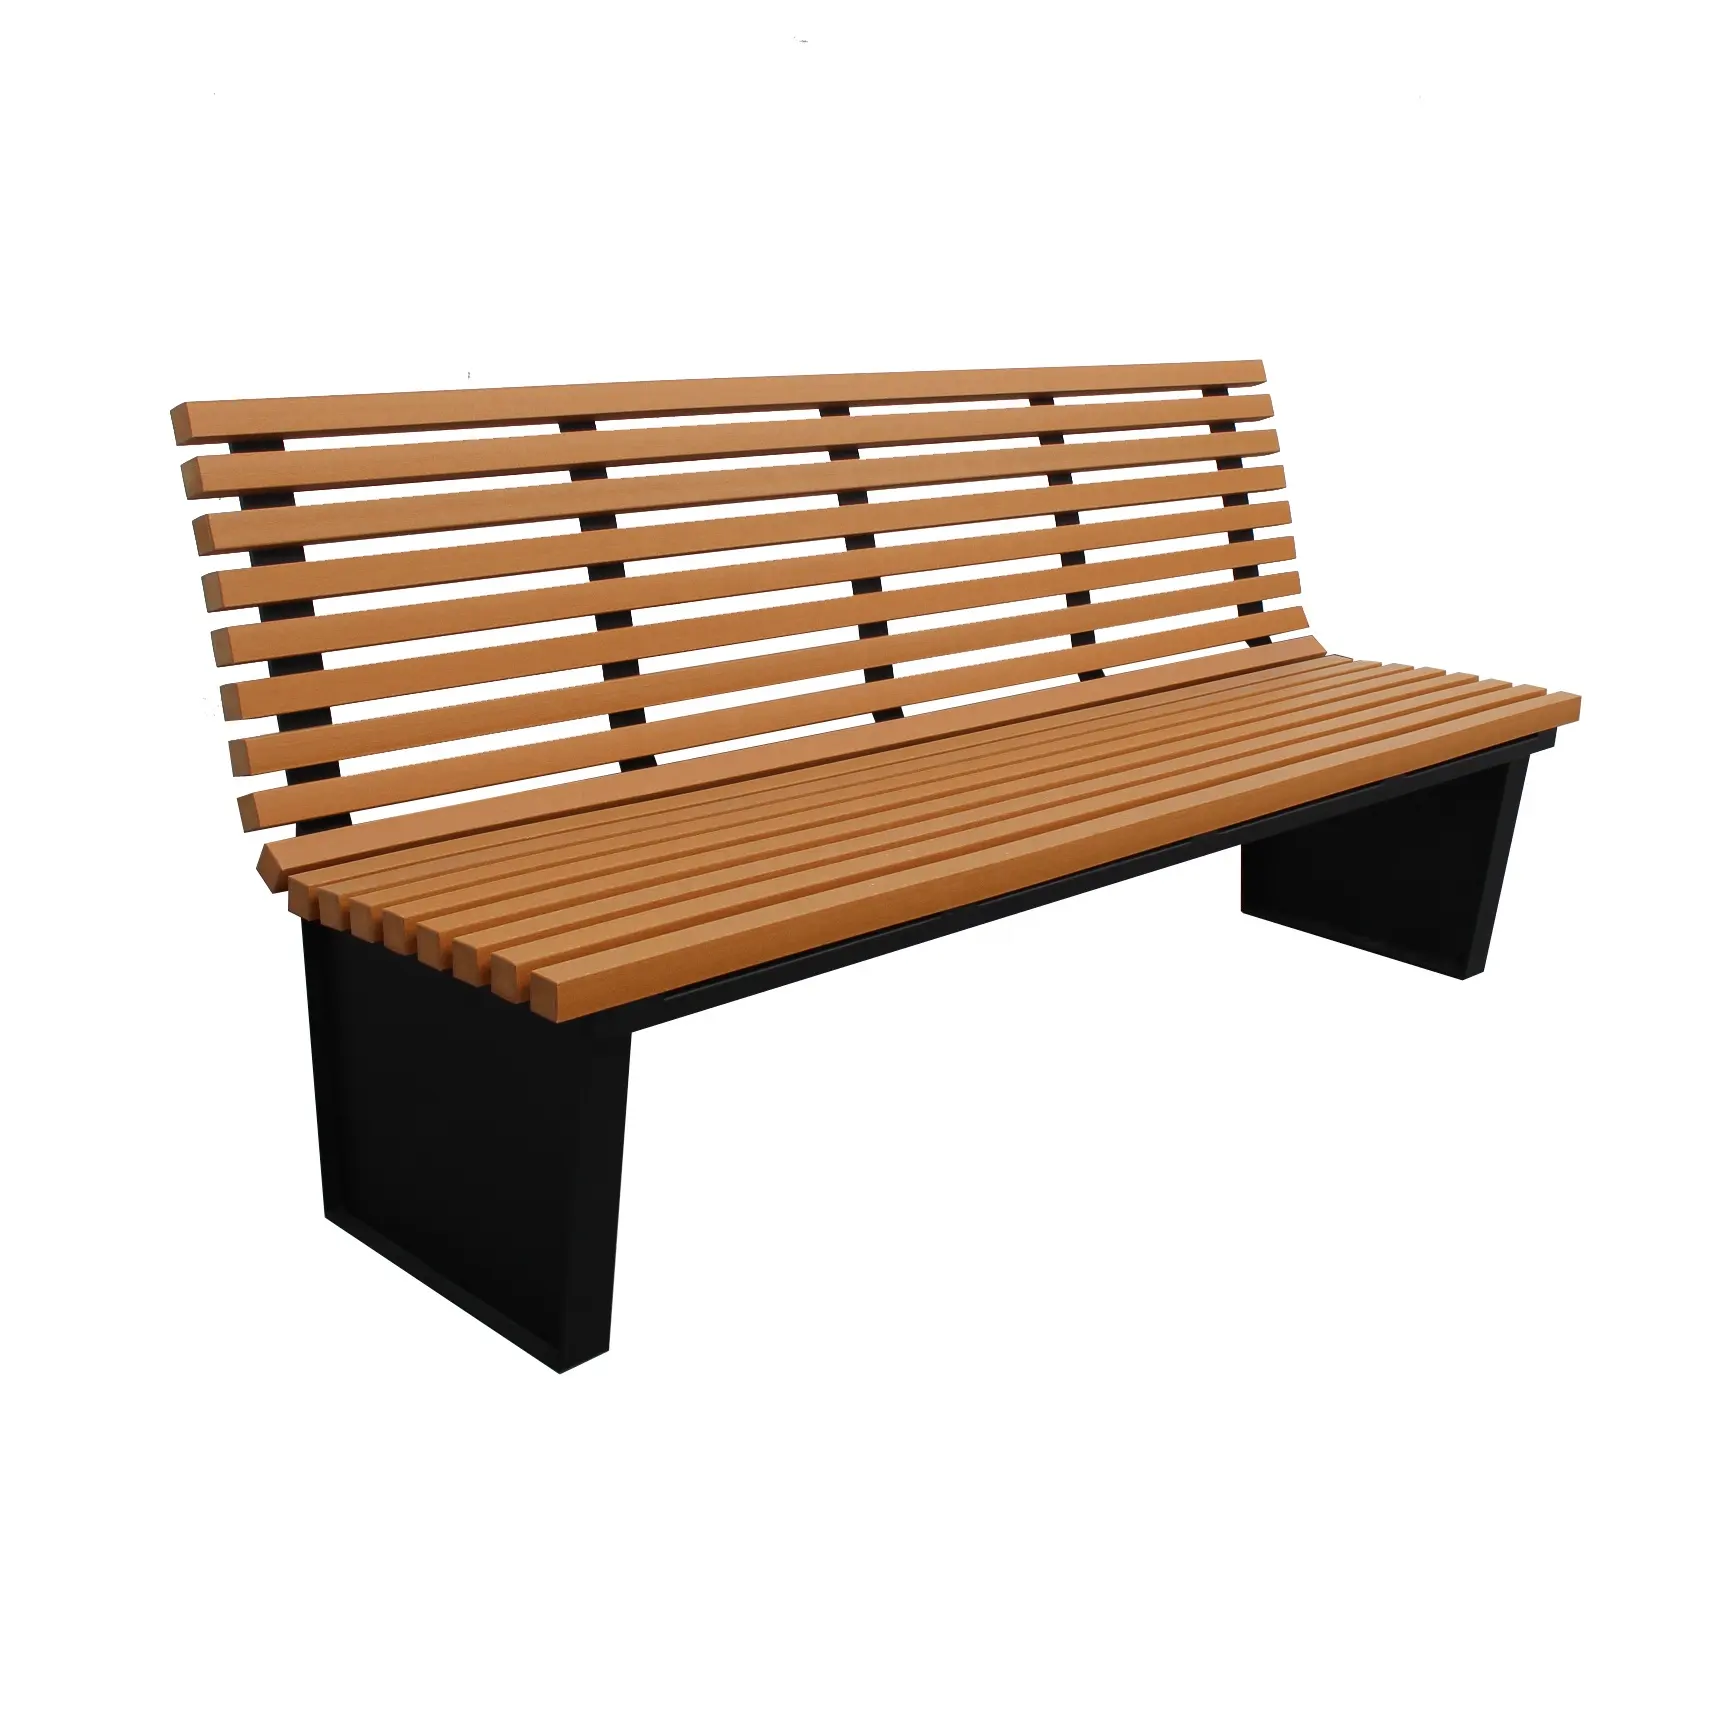 Gavin outside furniture manufacturer 1830mm 6 feet long outdoor wooden garden benches with backrest